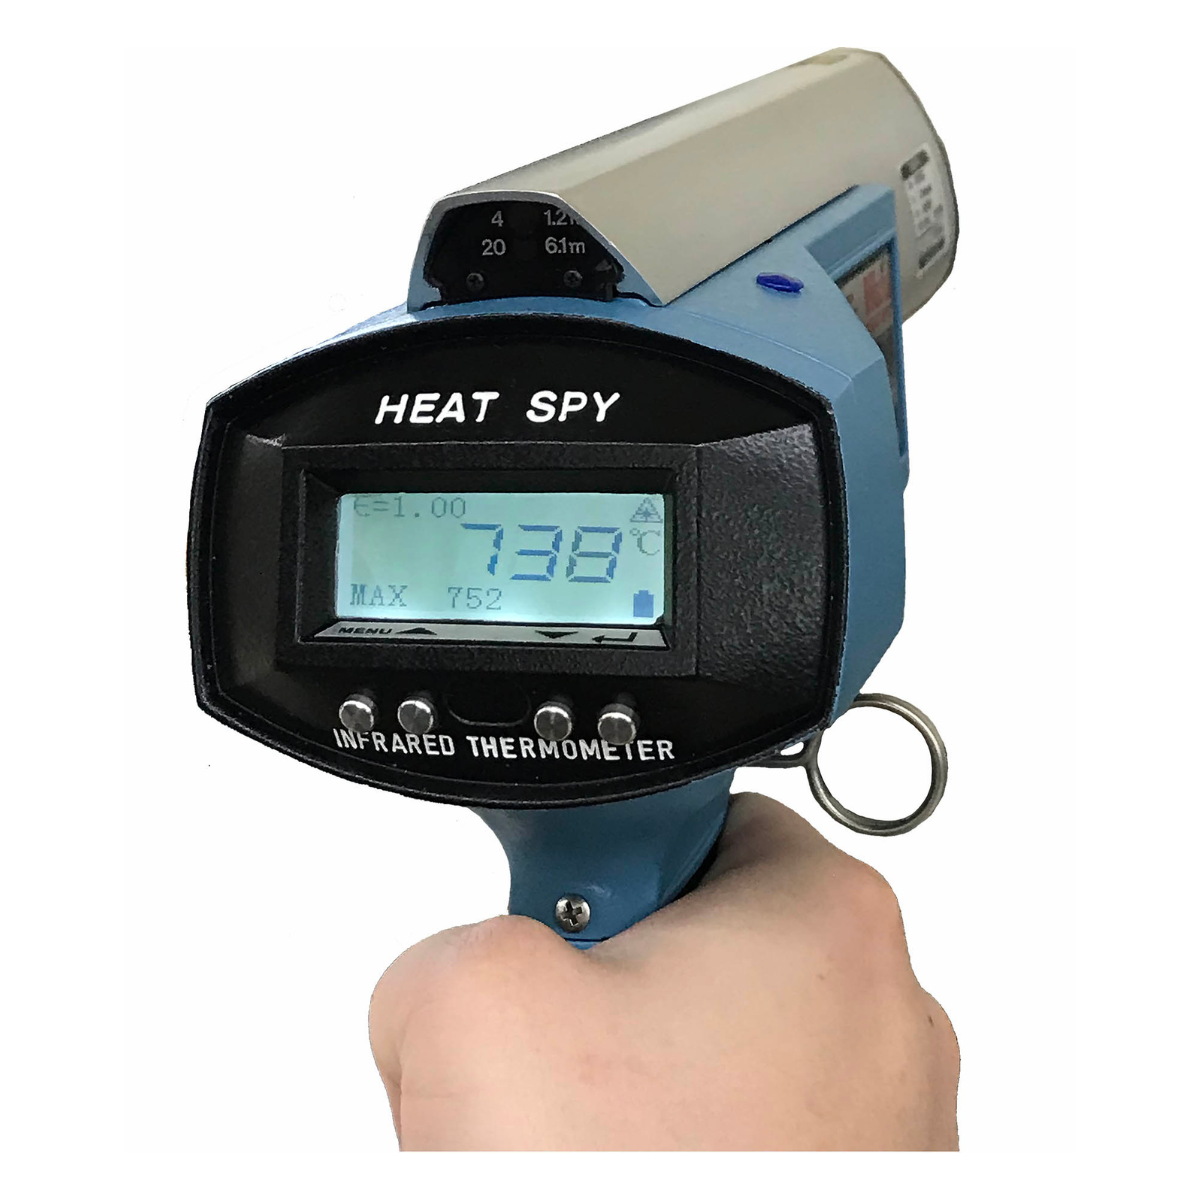 DHS40 Series Heat Spy High Performance Handheld Infrared